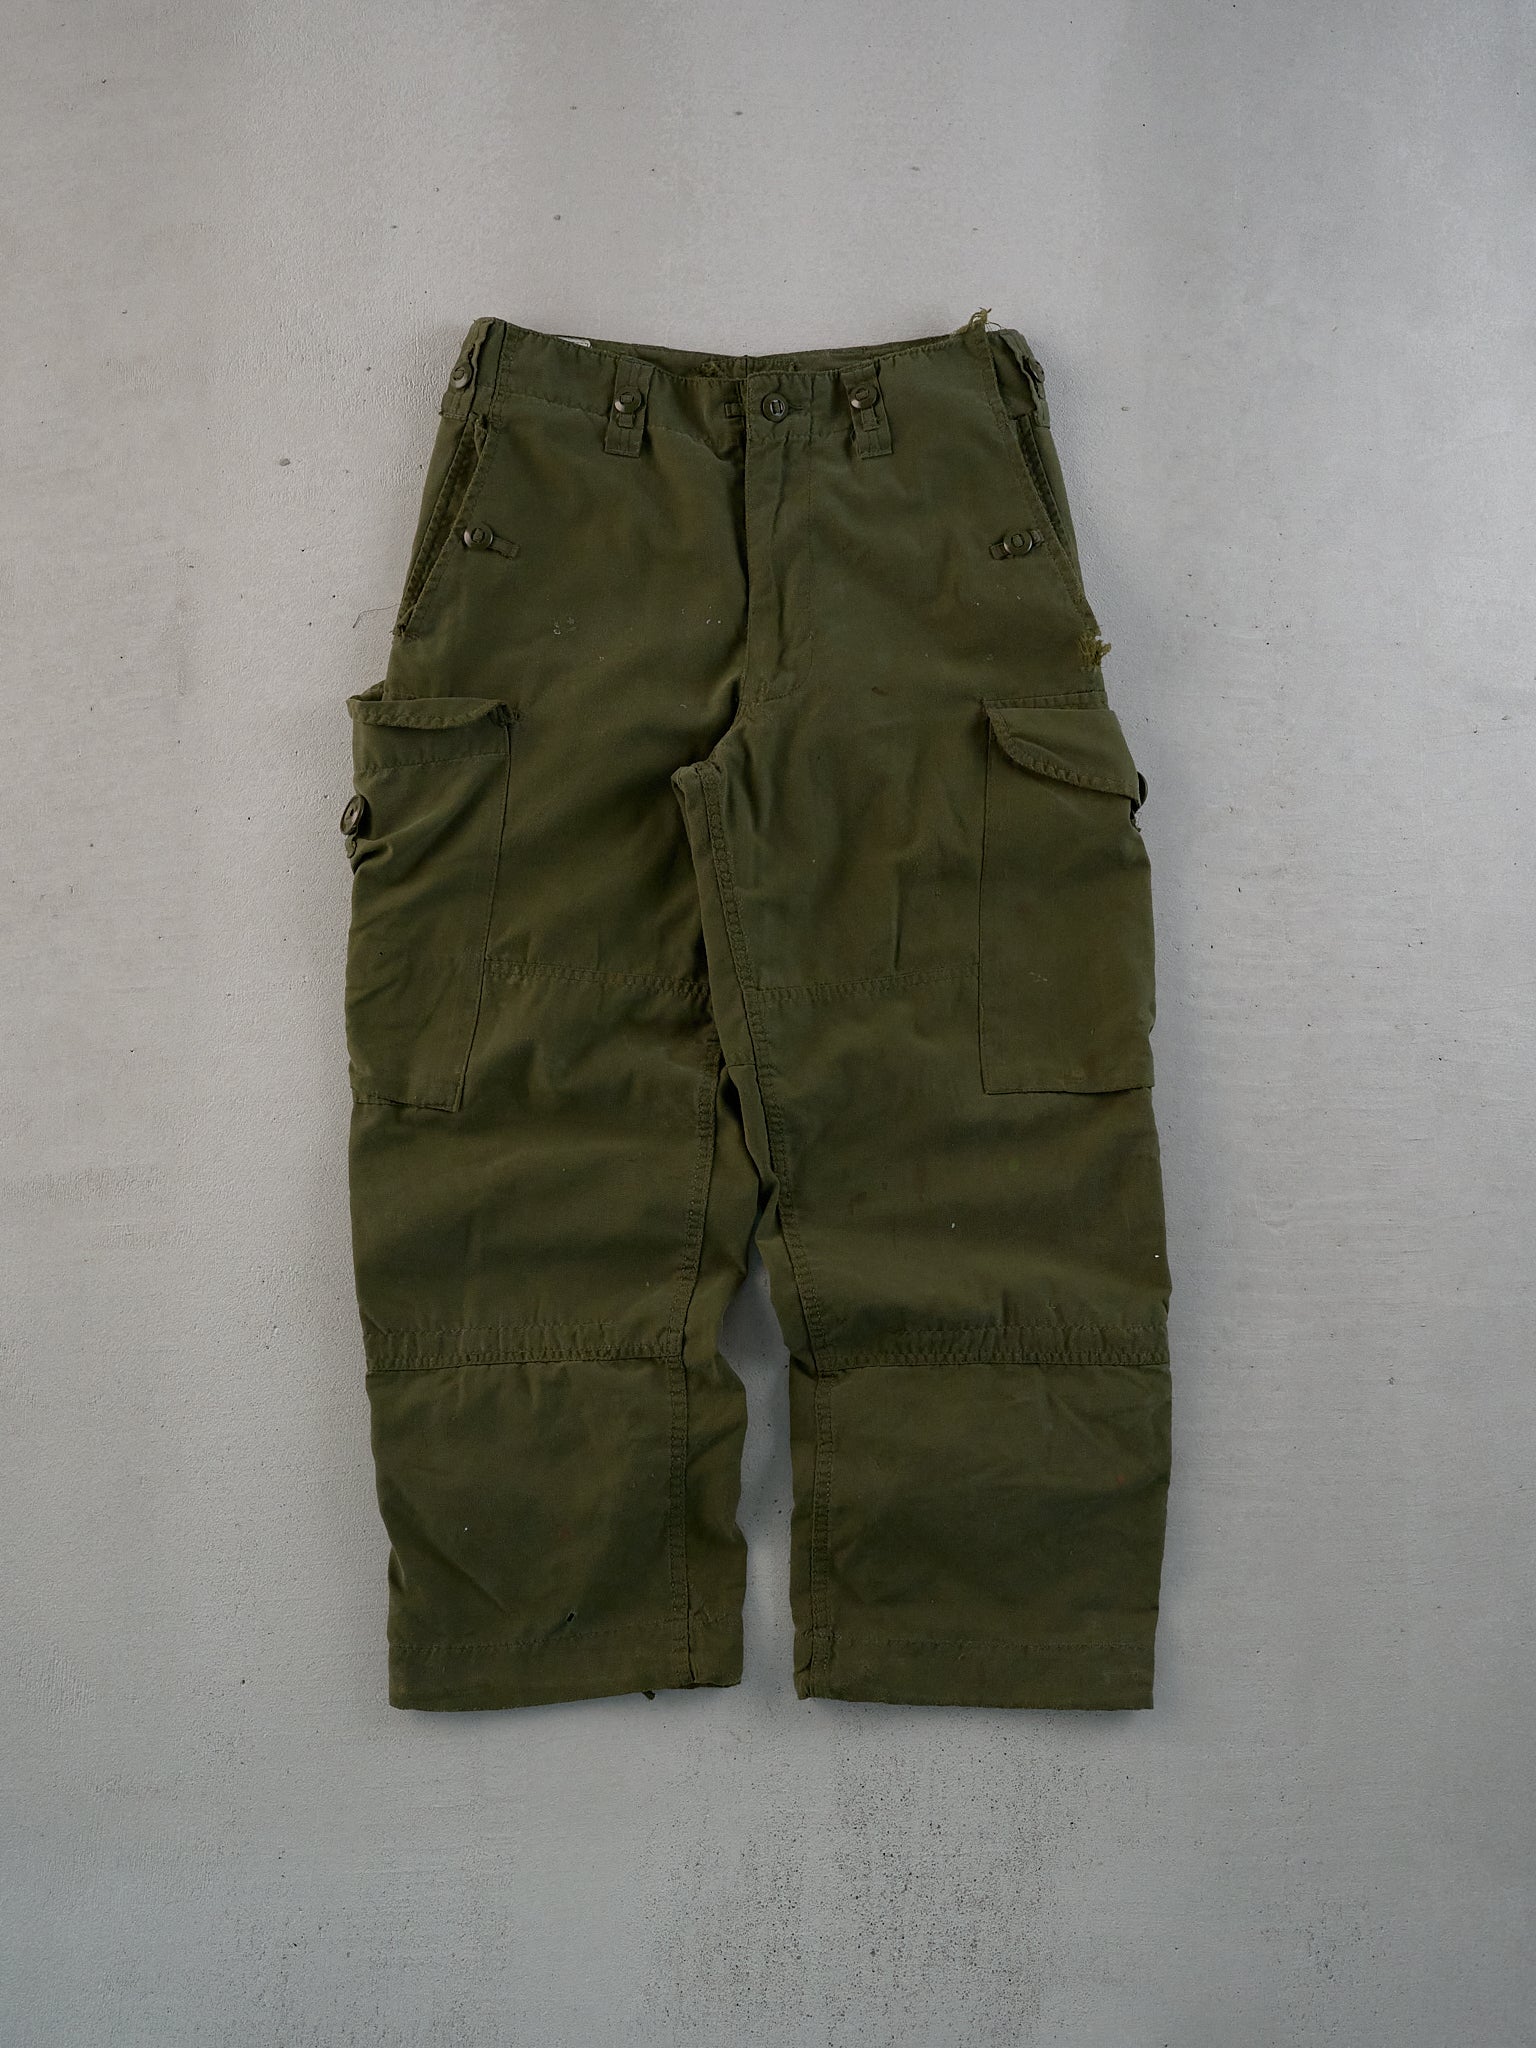 Vintage 90s Green Army Parachute Cargo Pants (29x27)